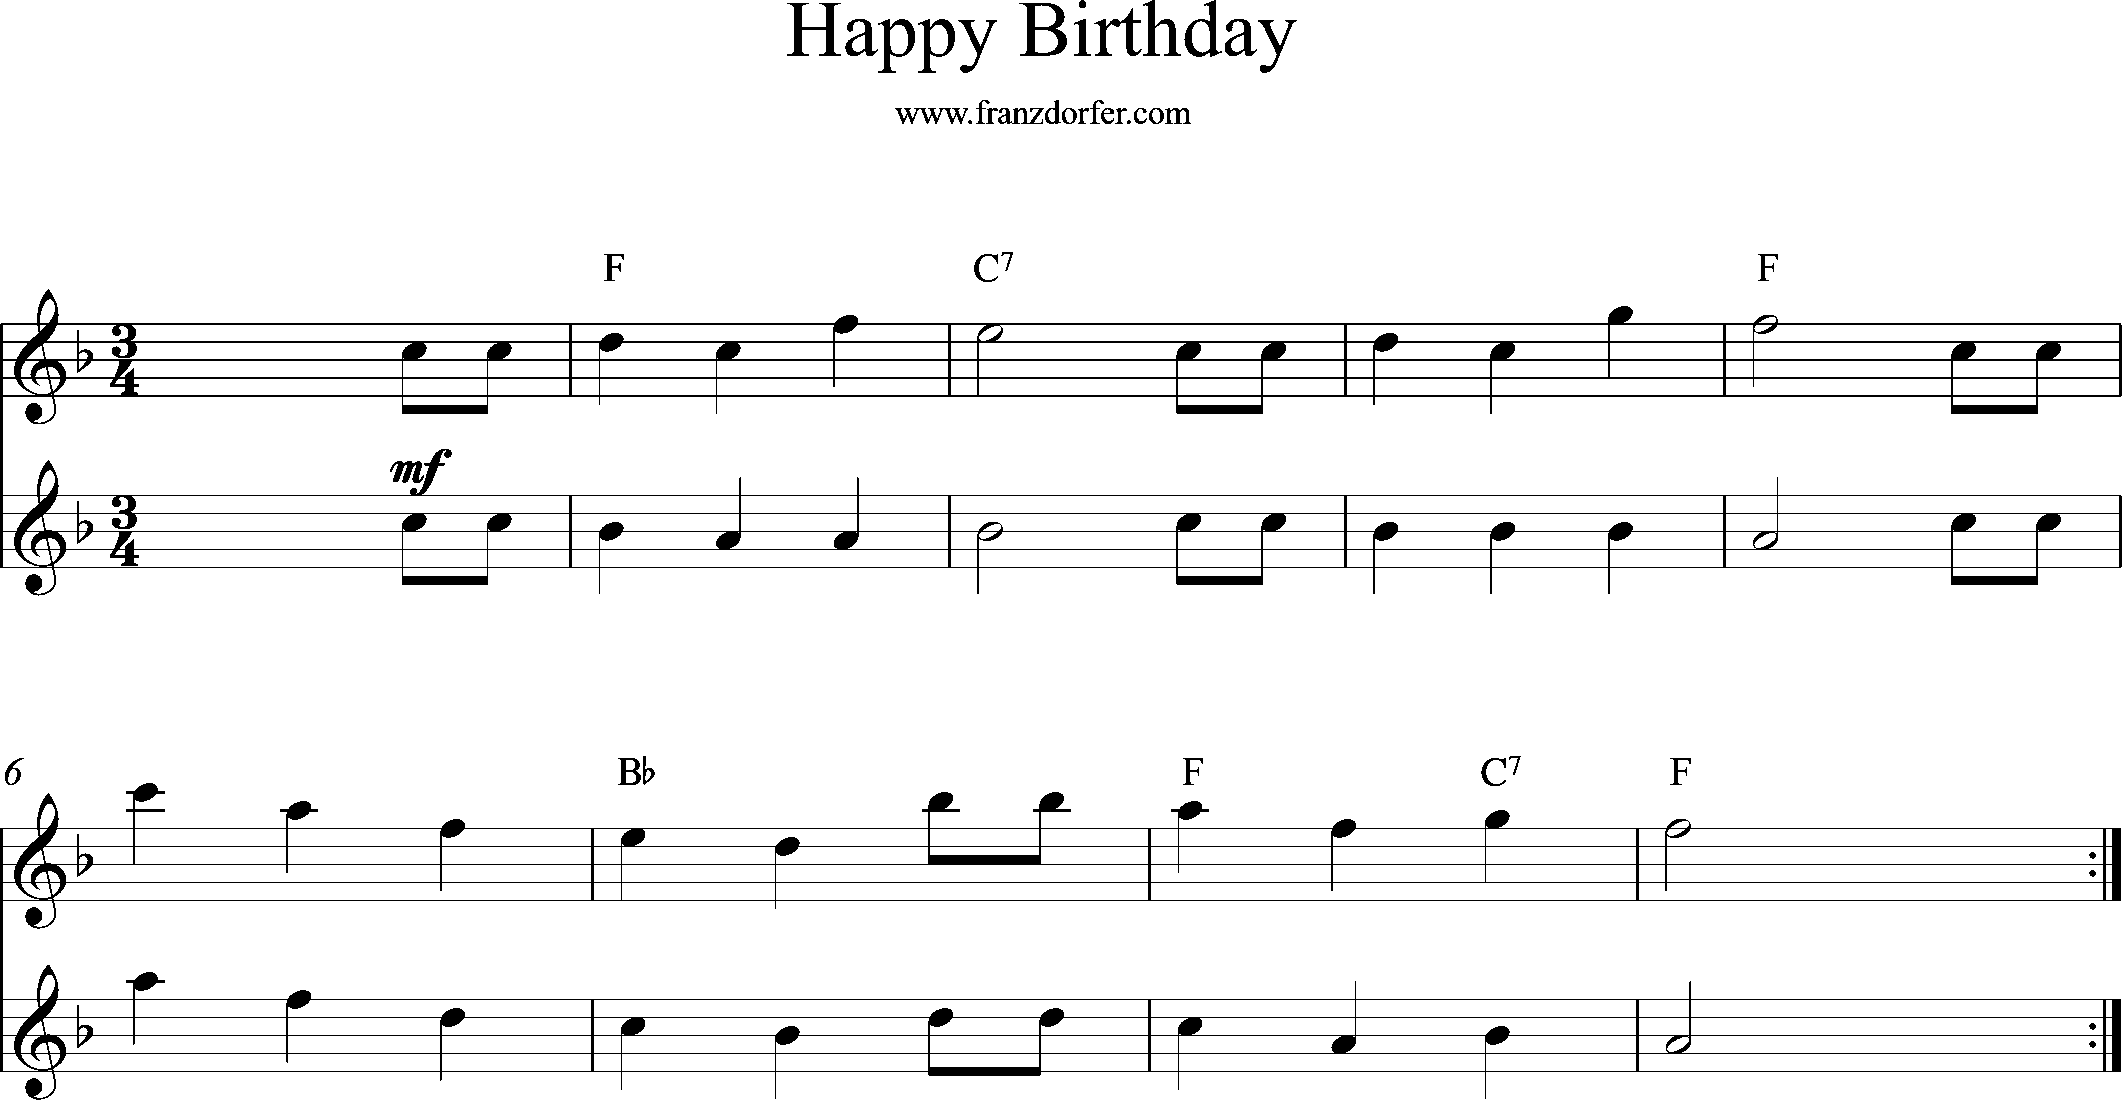 sheetmusic for Flute, Happy Birthday, F-Major